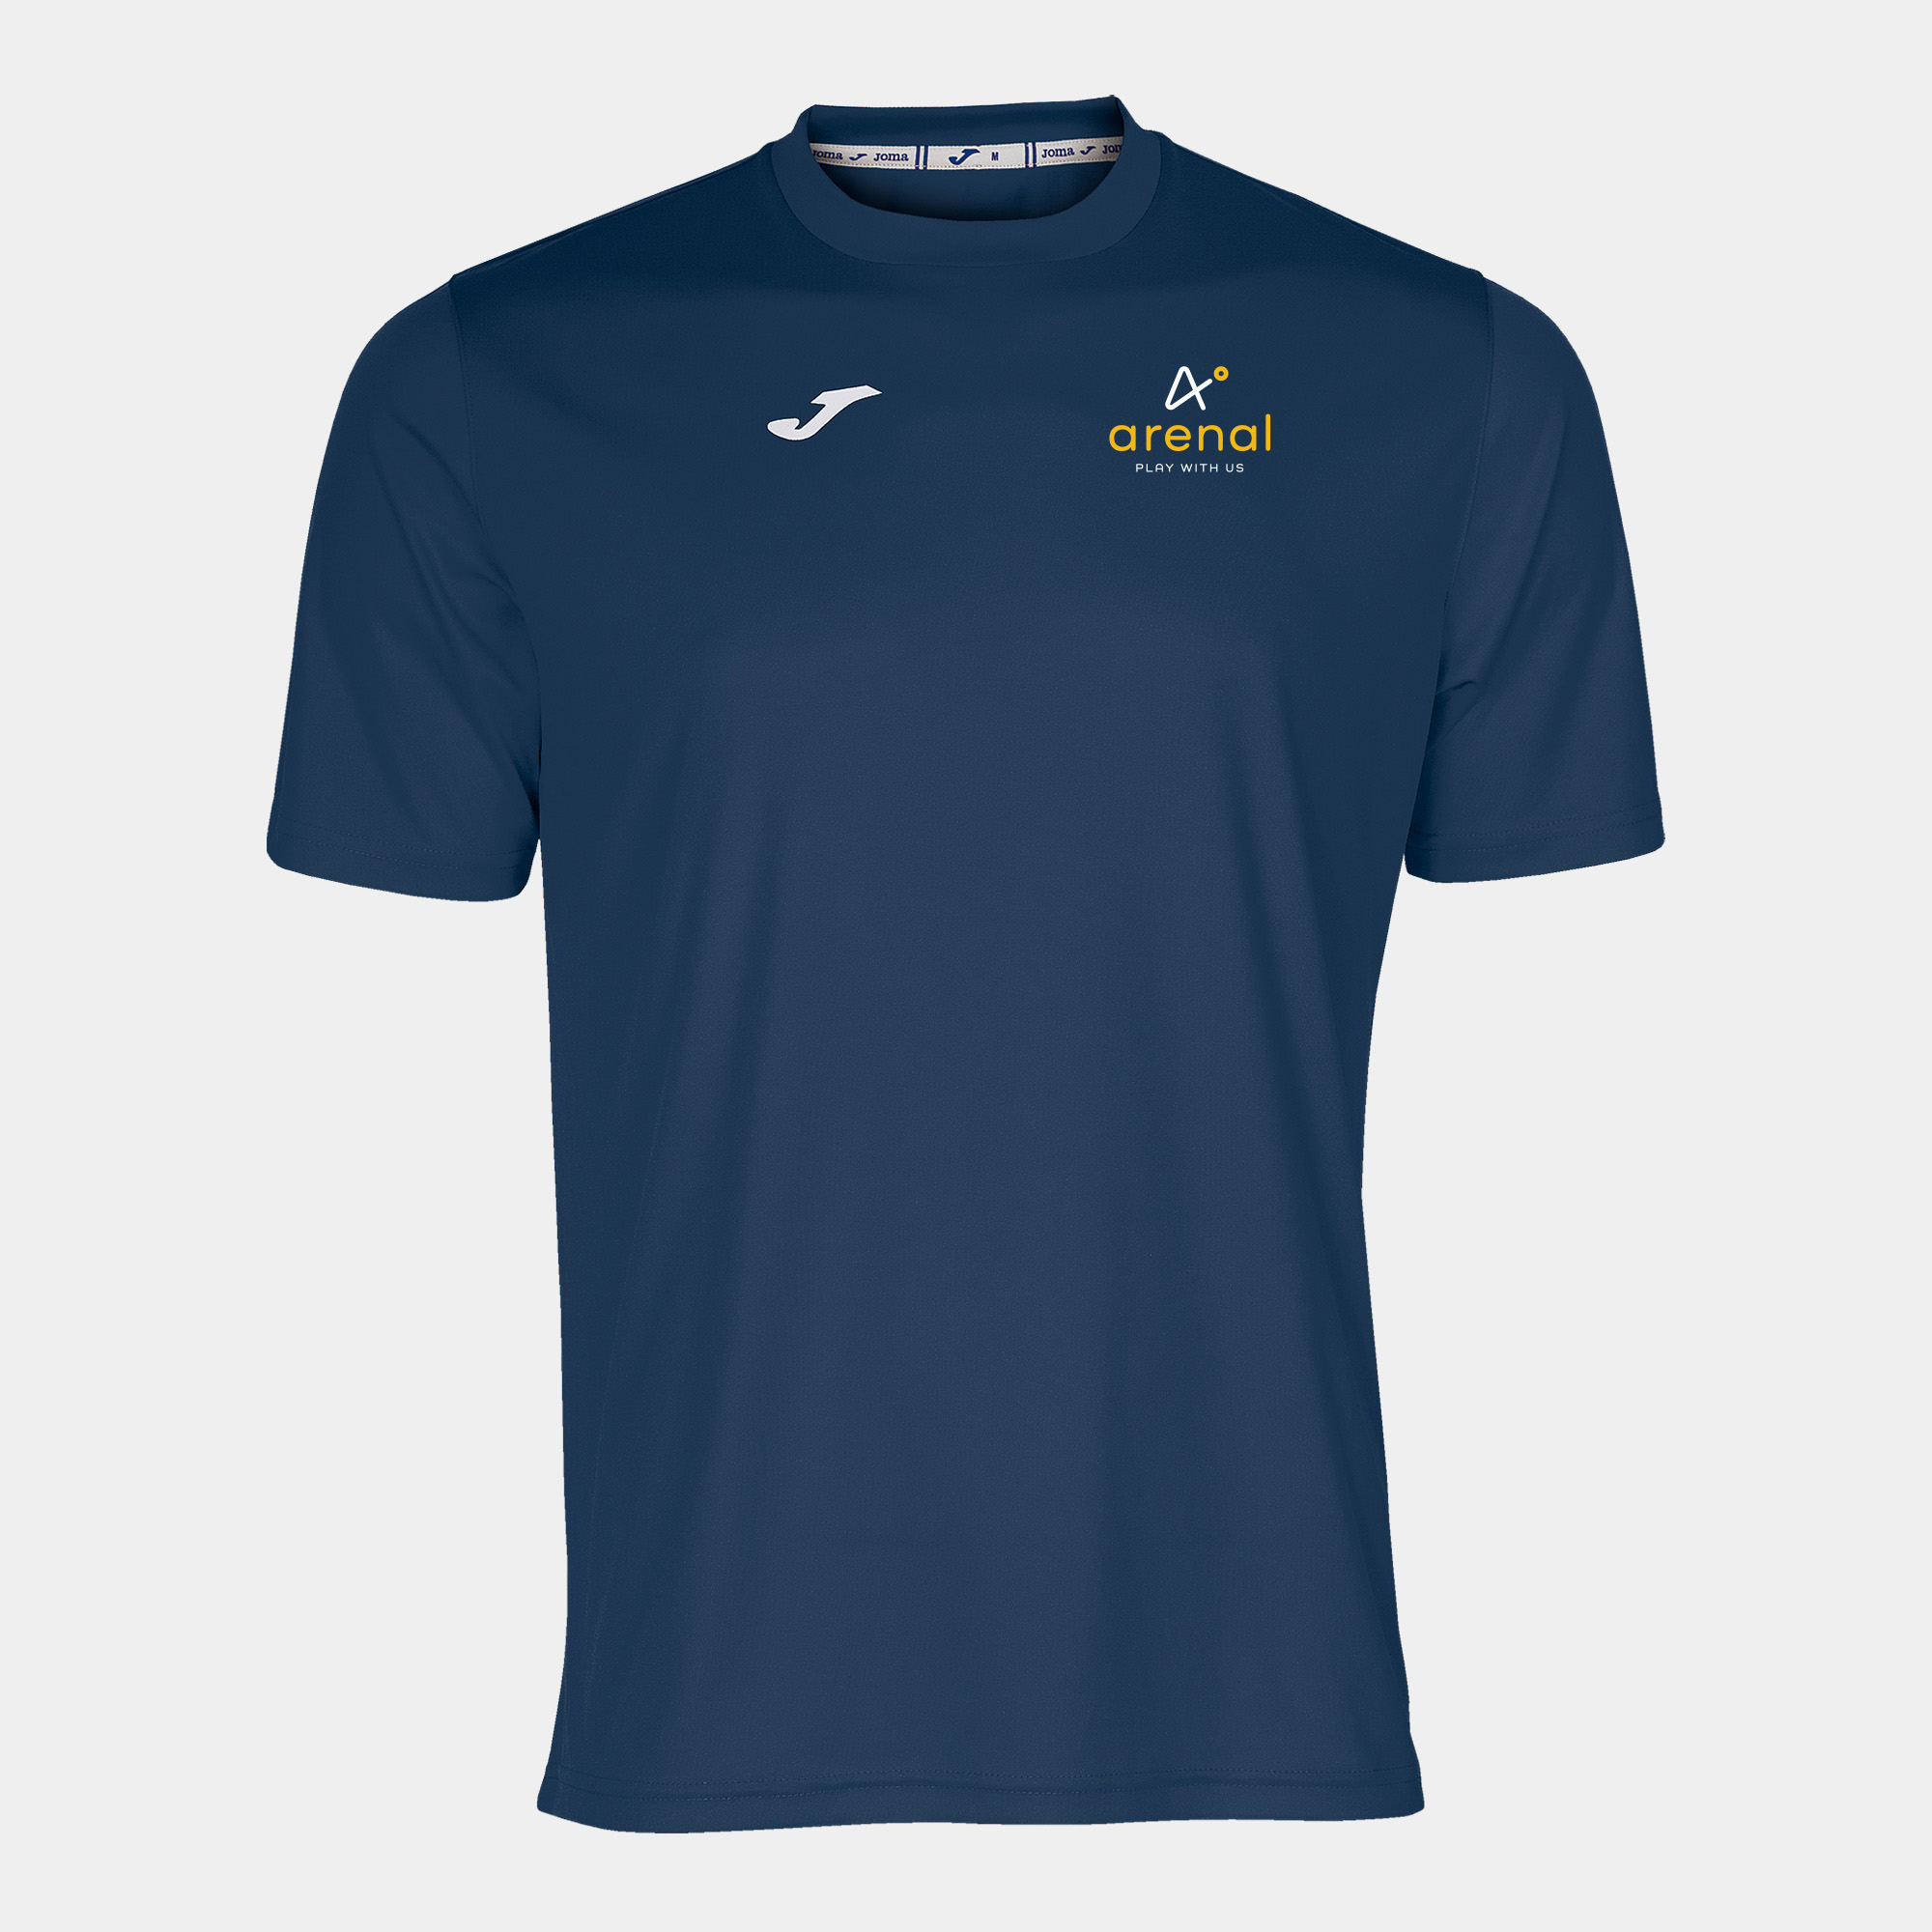 Arenal - Shirt short sleeve man Combi navy blue